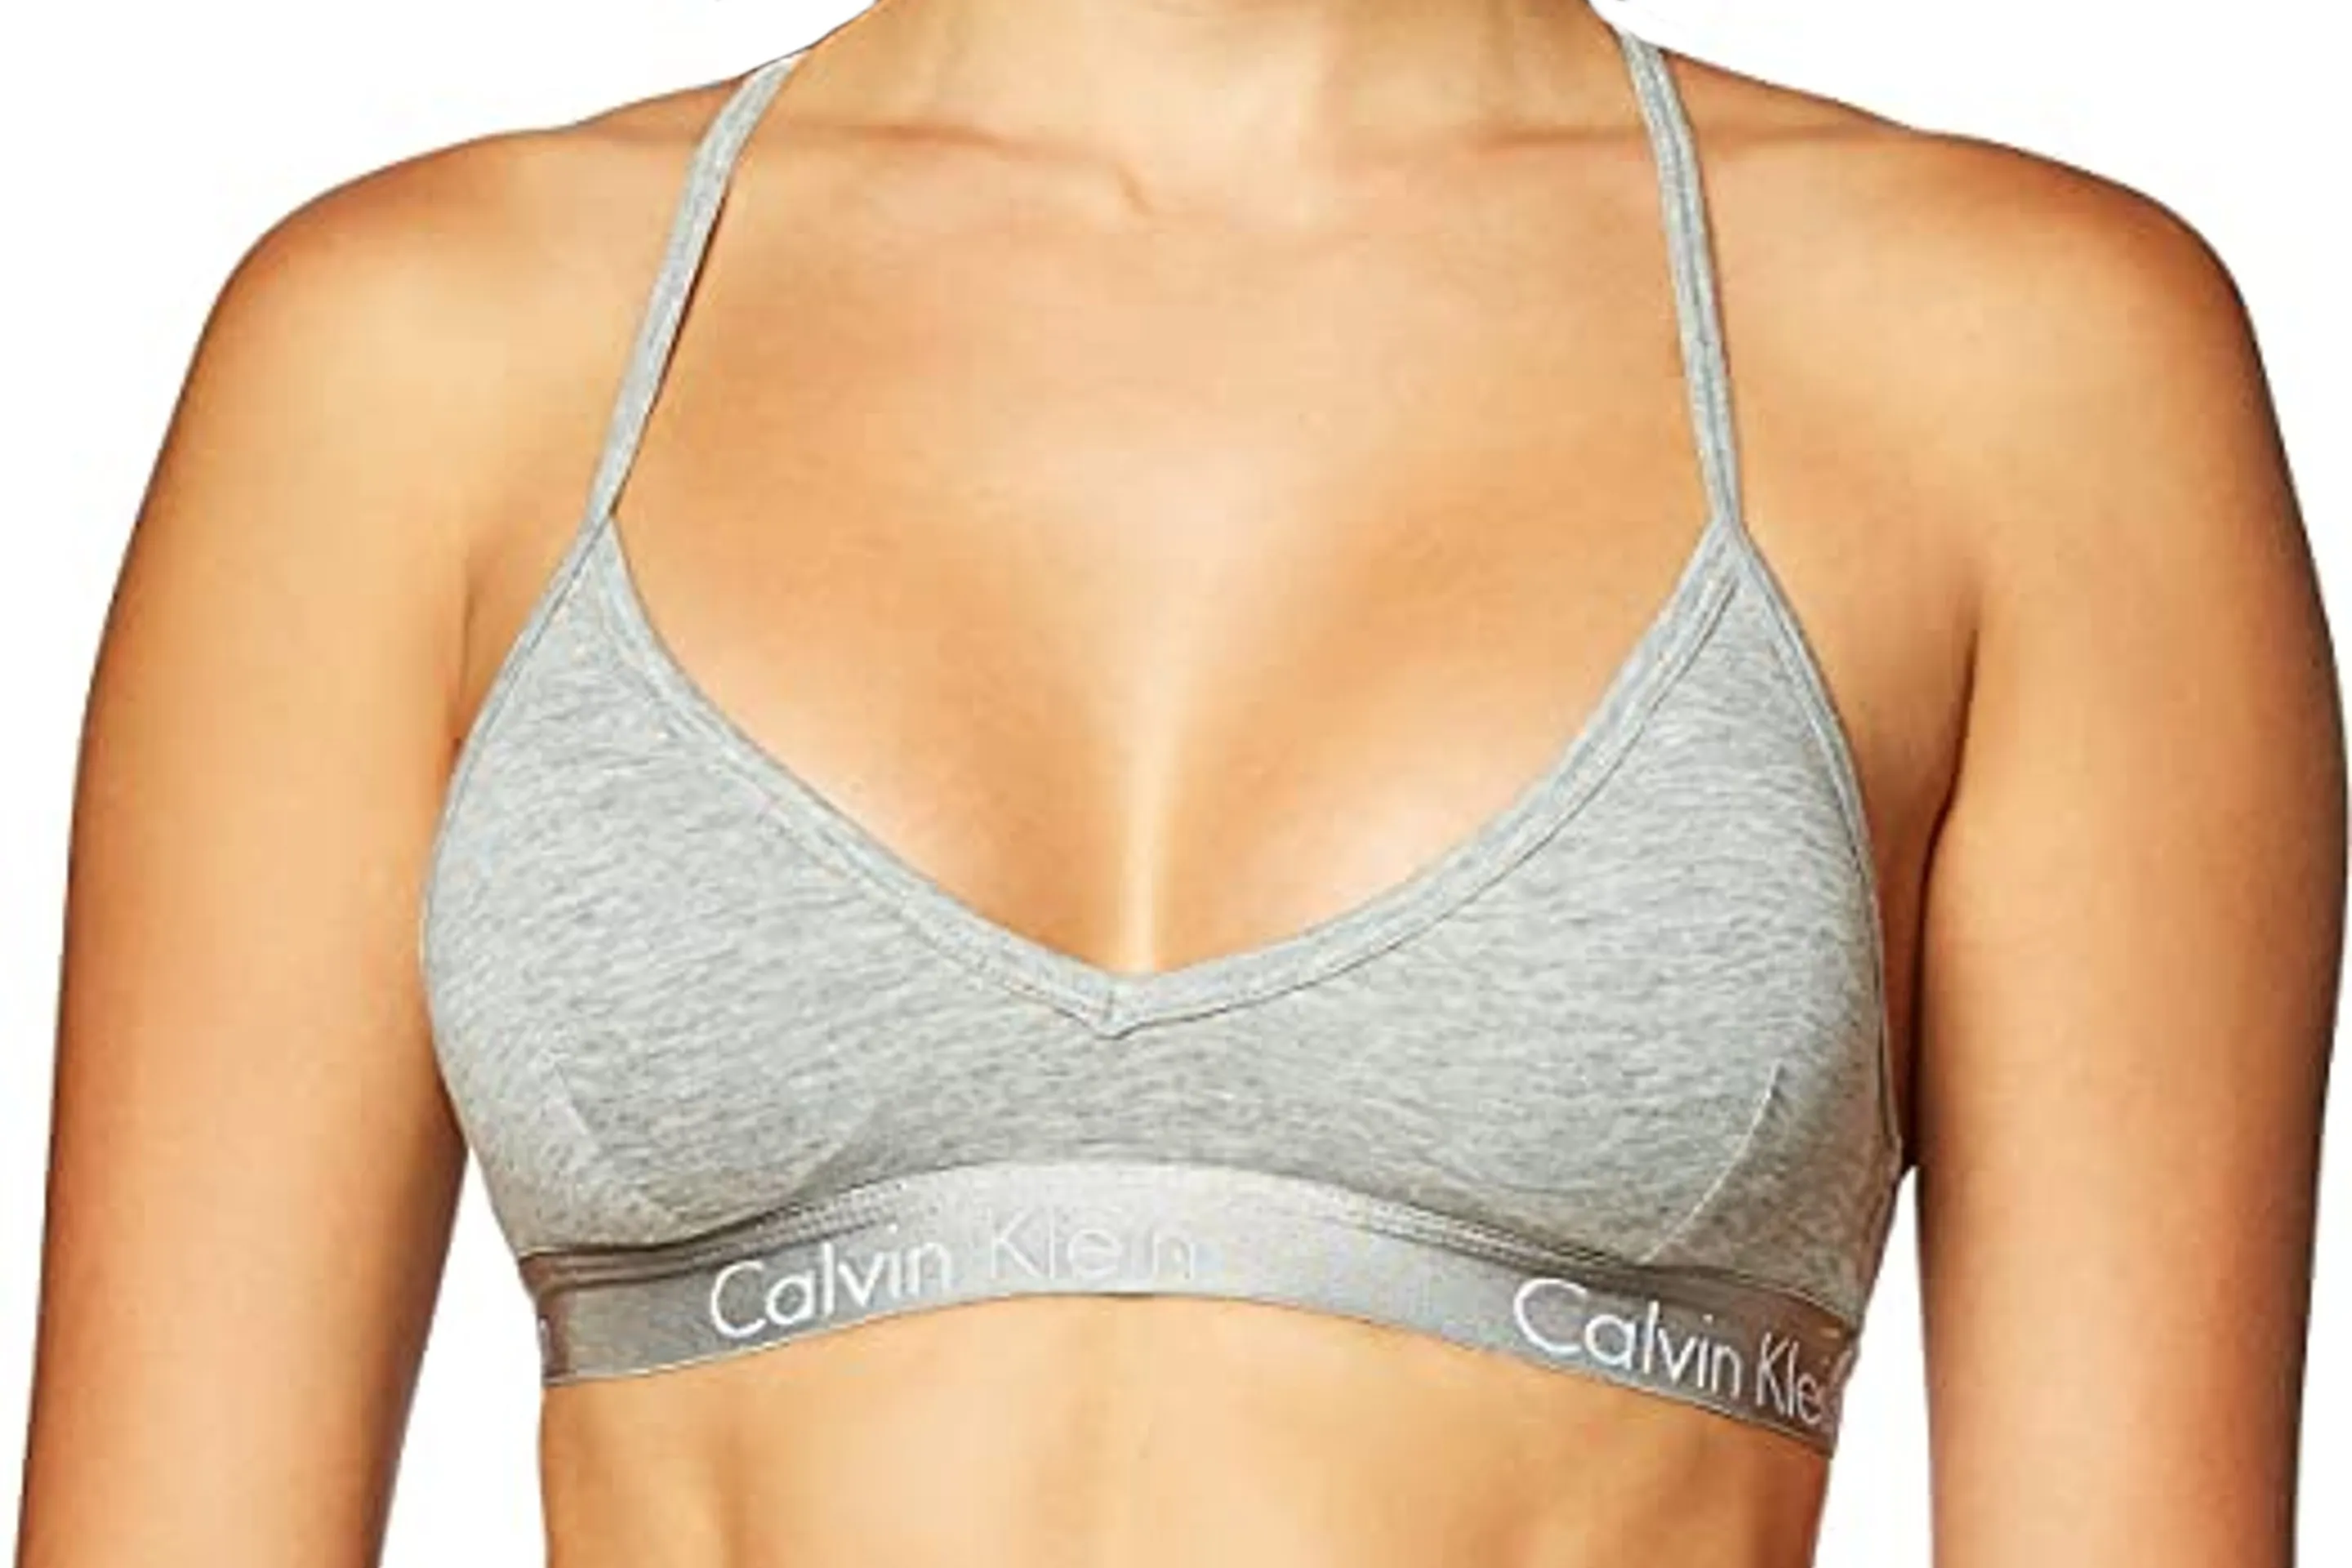 Shop This Calvin Klein Amazon Sale to Save up to 50% | Money